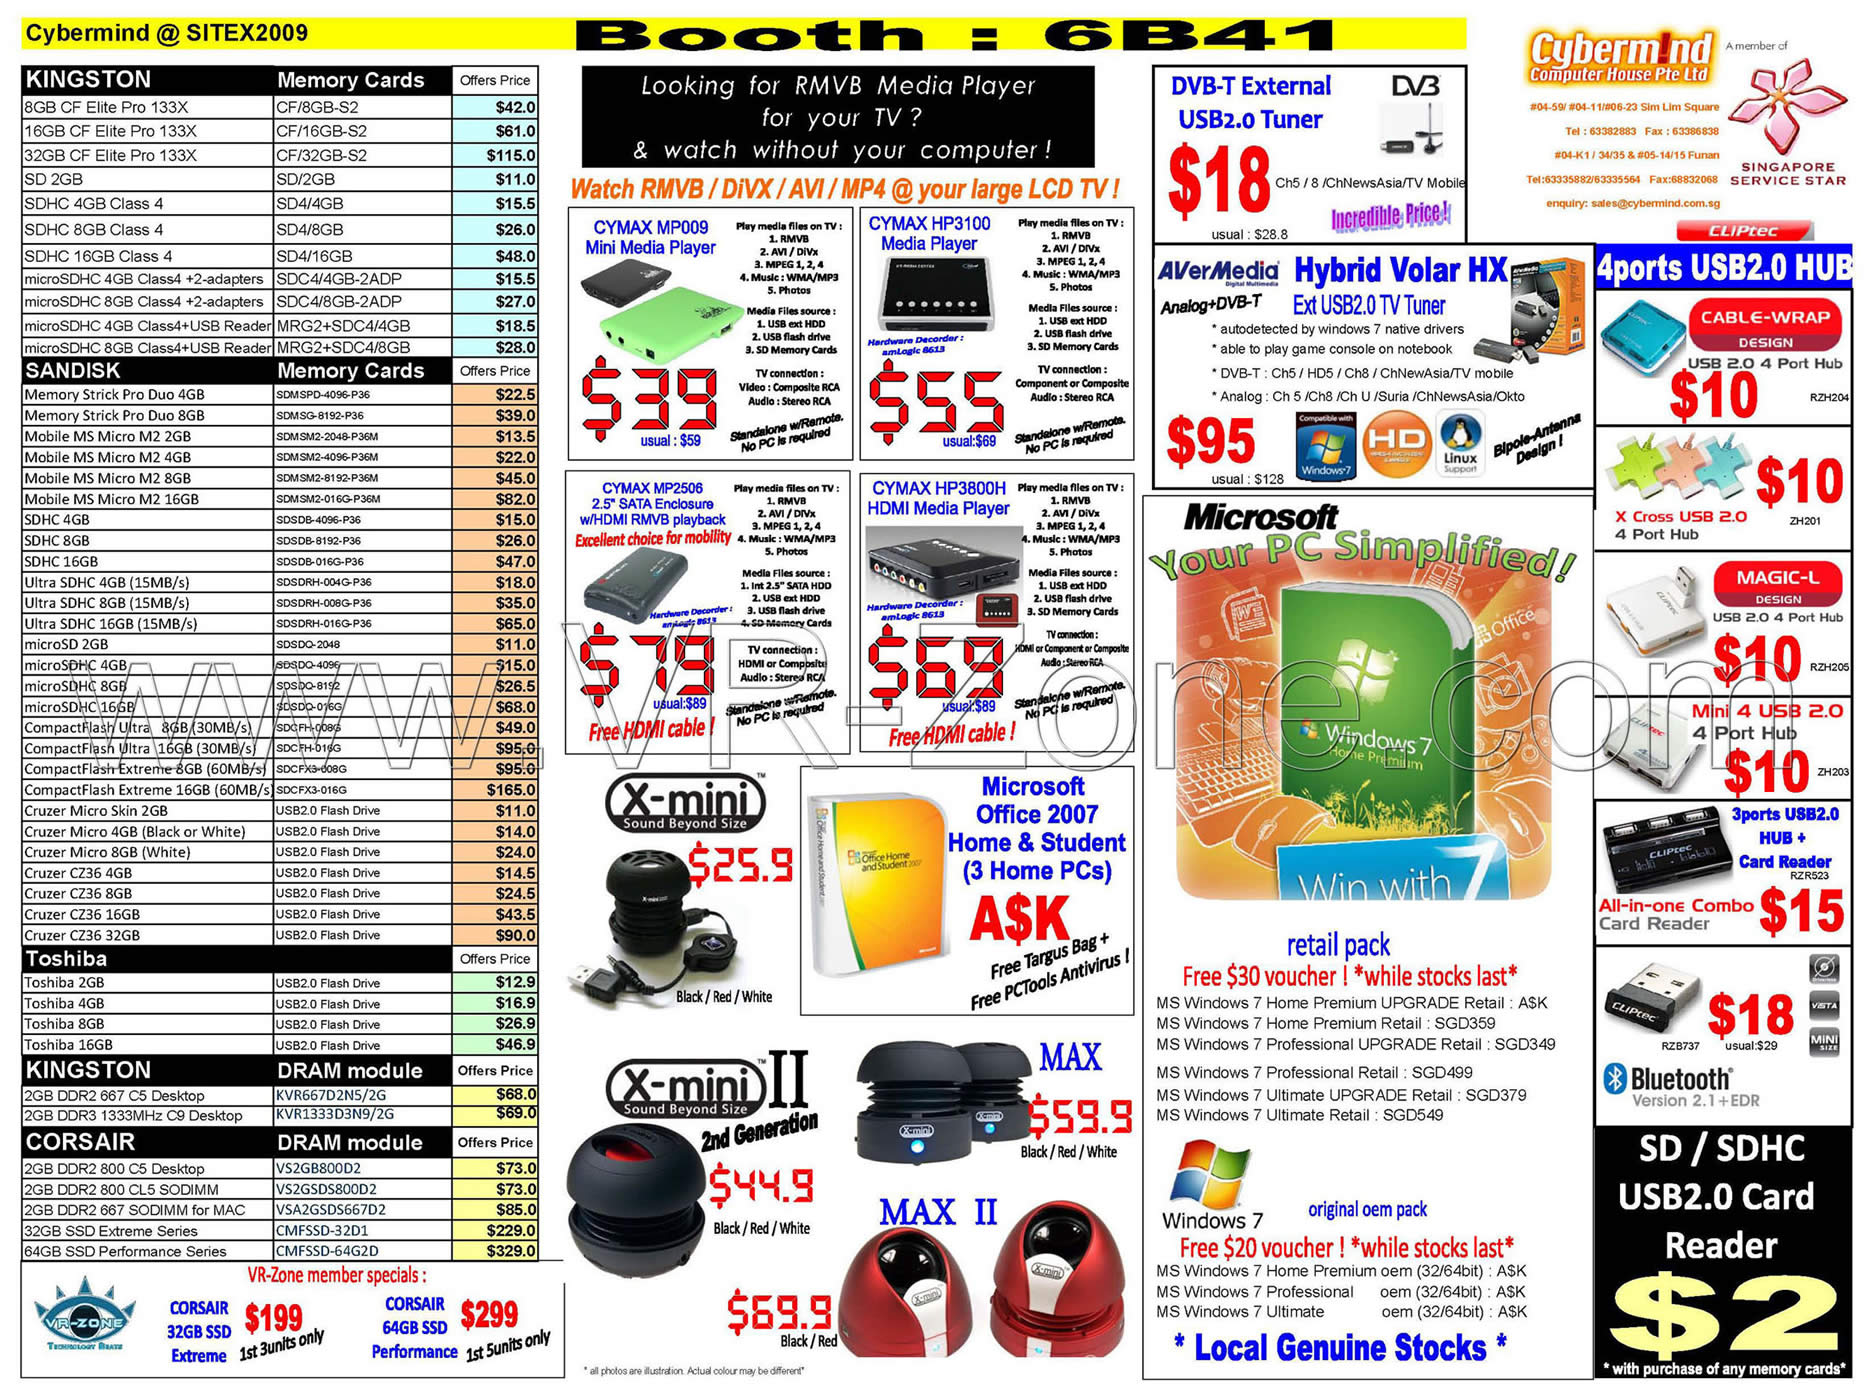 Sitex 2009 price list image brochure of Cybermind Memory RAM Kingston Media Player Microsoft Sandisk X Mini Cymax